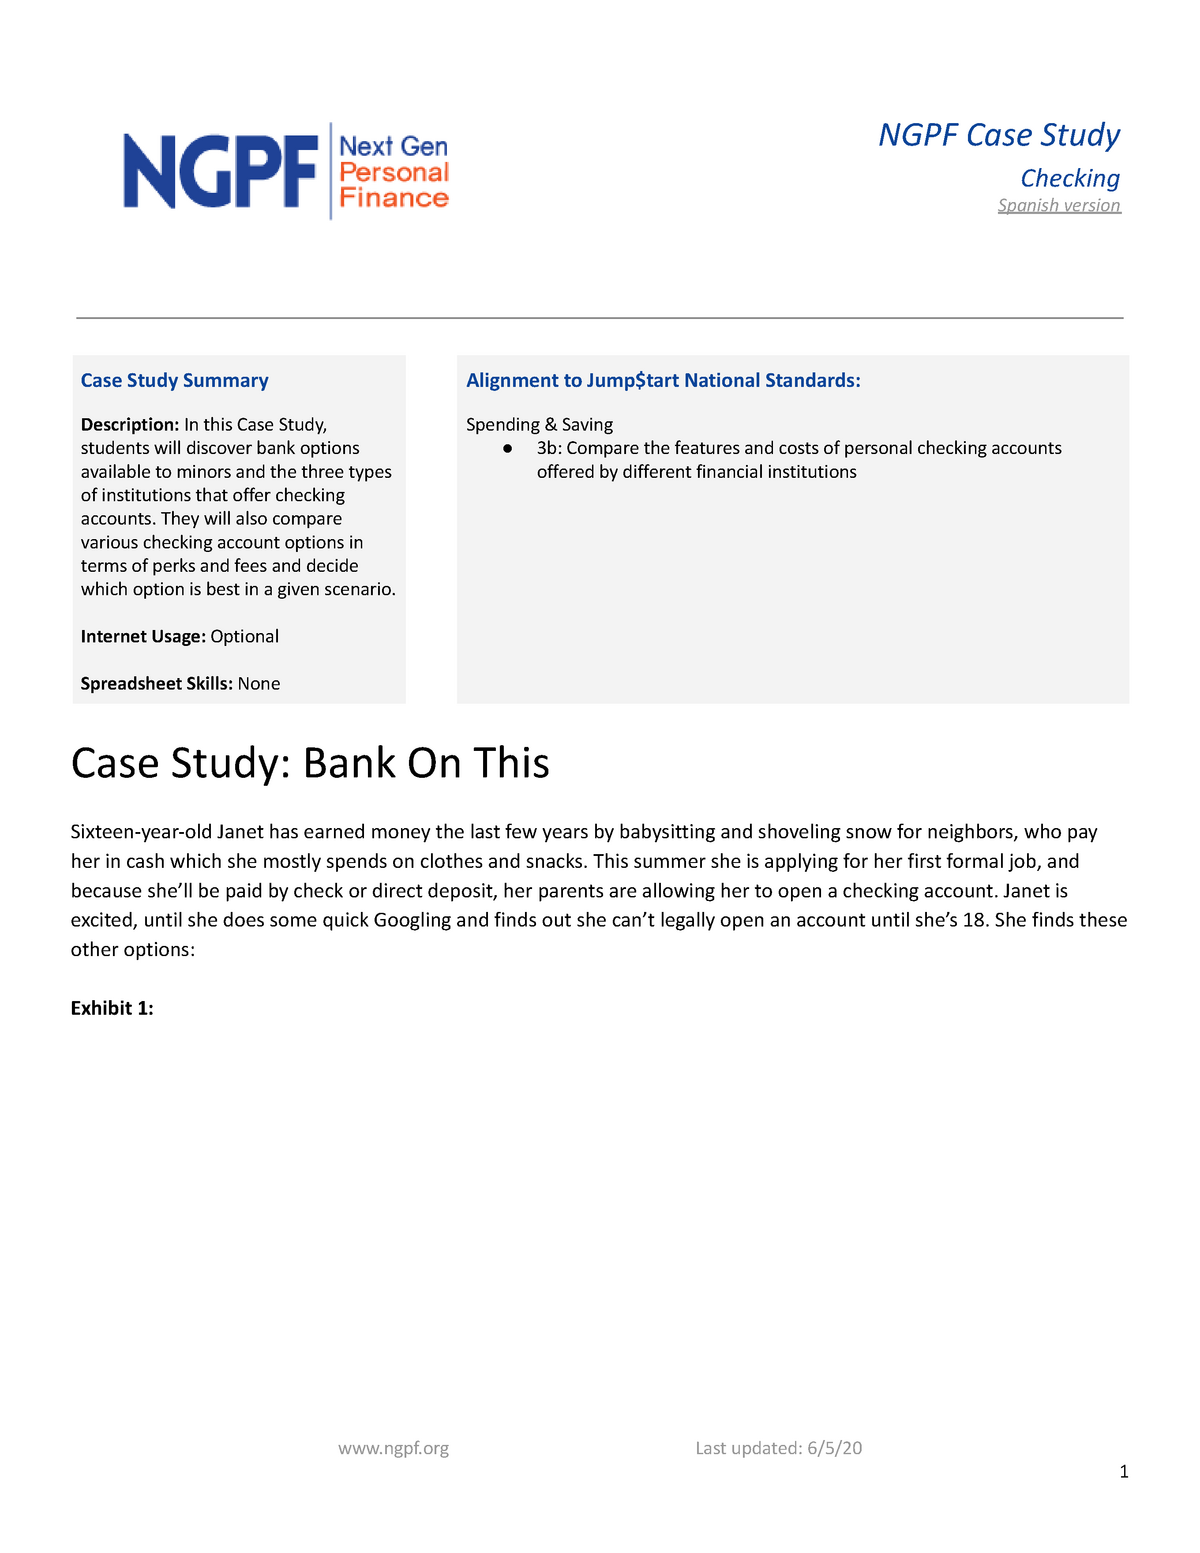 ngpf case study consumer skills answer key